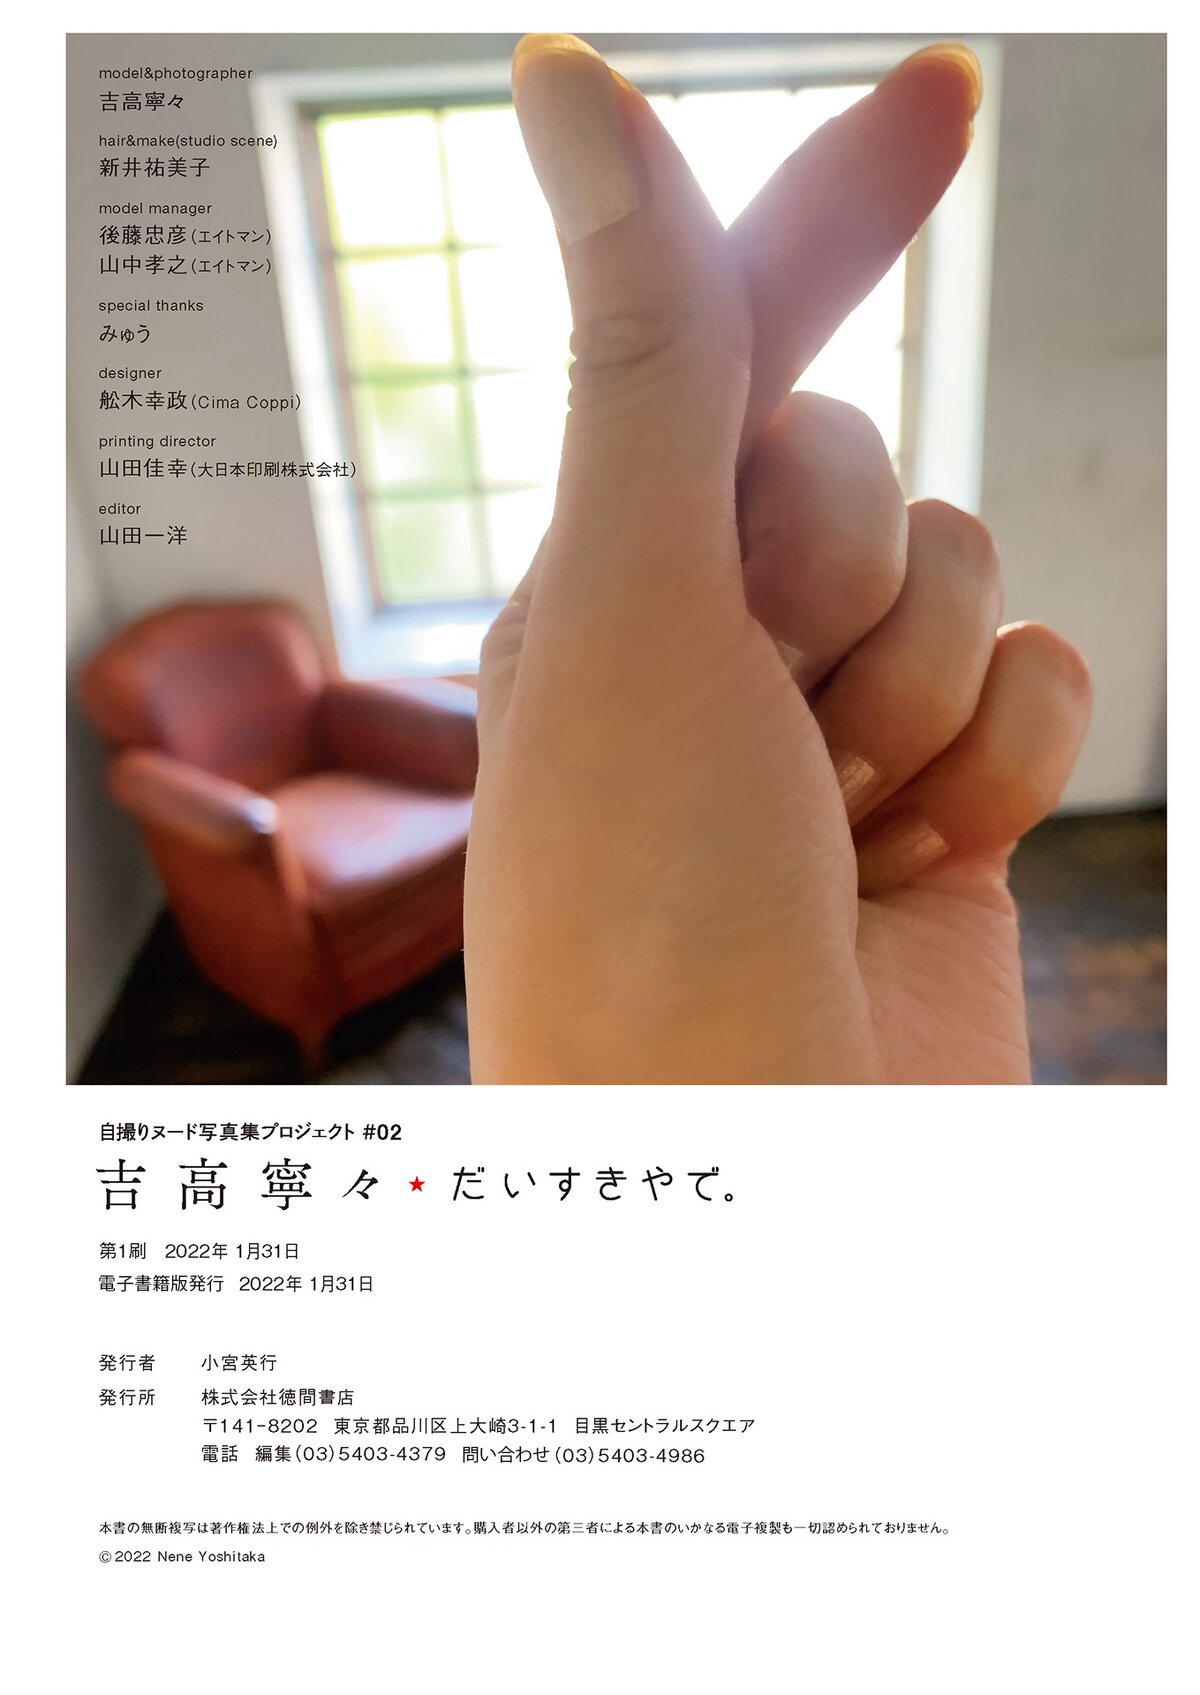 Photobook 2022 01 28 Selfie Nude Photo Book Project 02 Nene Yoshitaka 吉高寧々 I Love You 0112 4690991026.jpg